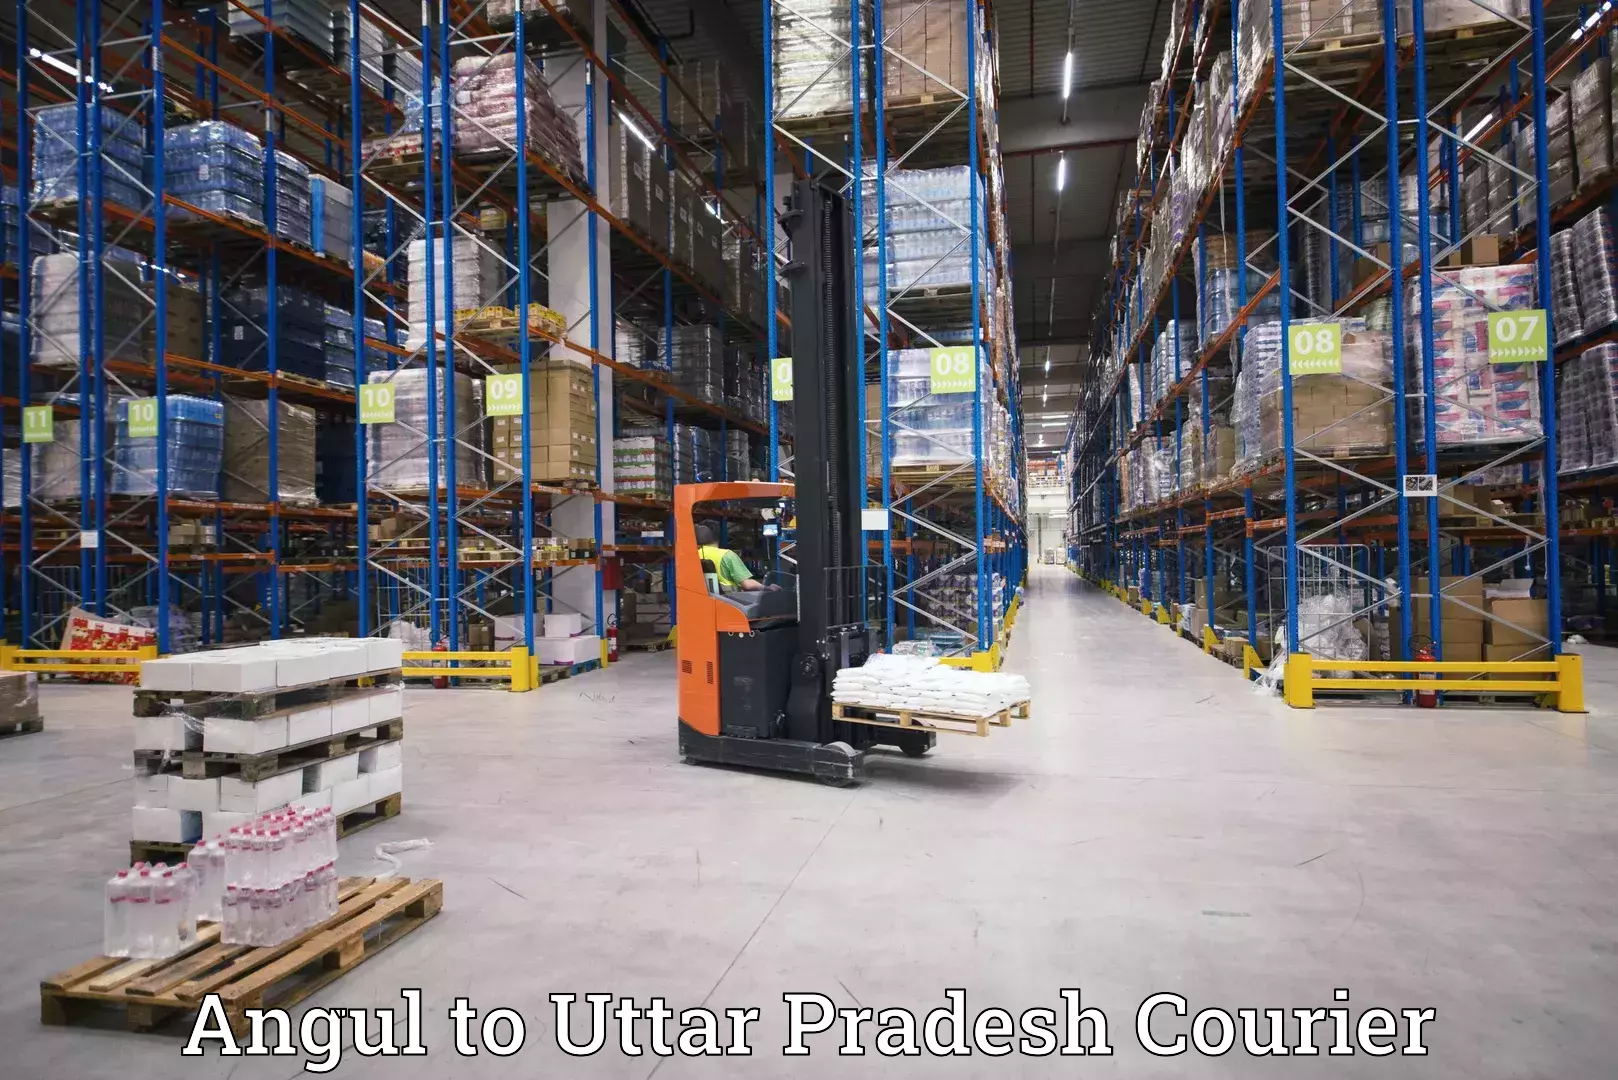 Small business couriers Angul to Prayagraj